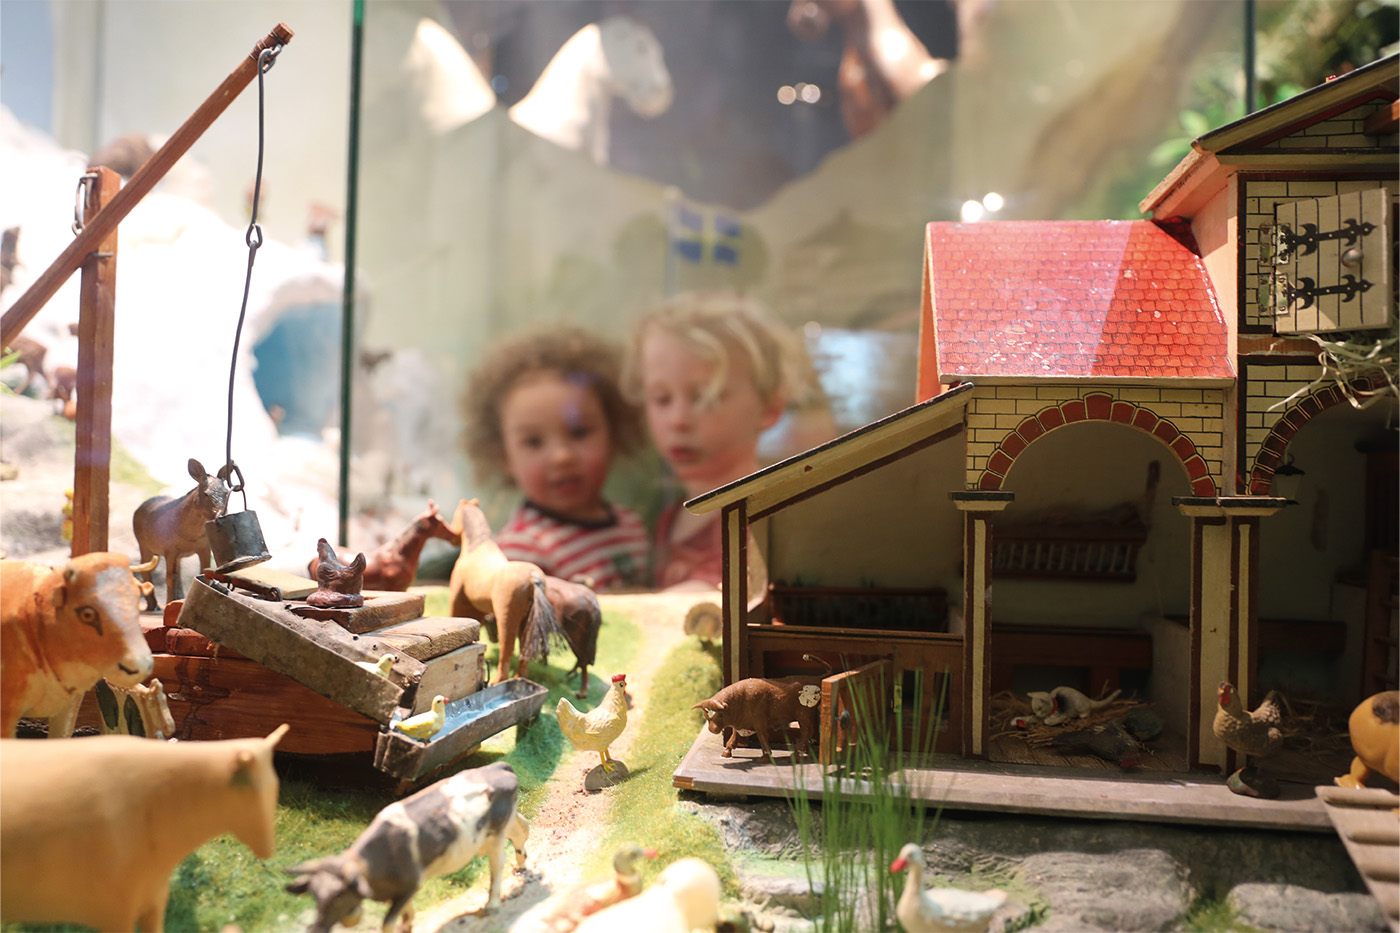 Barn spanar in leksakerna på leksaksmuseum Stockholm